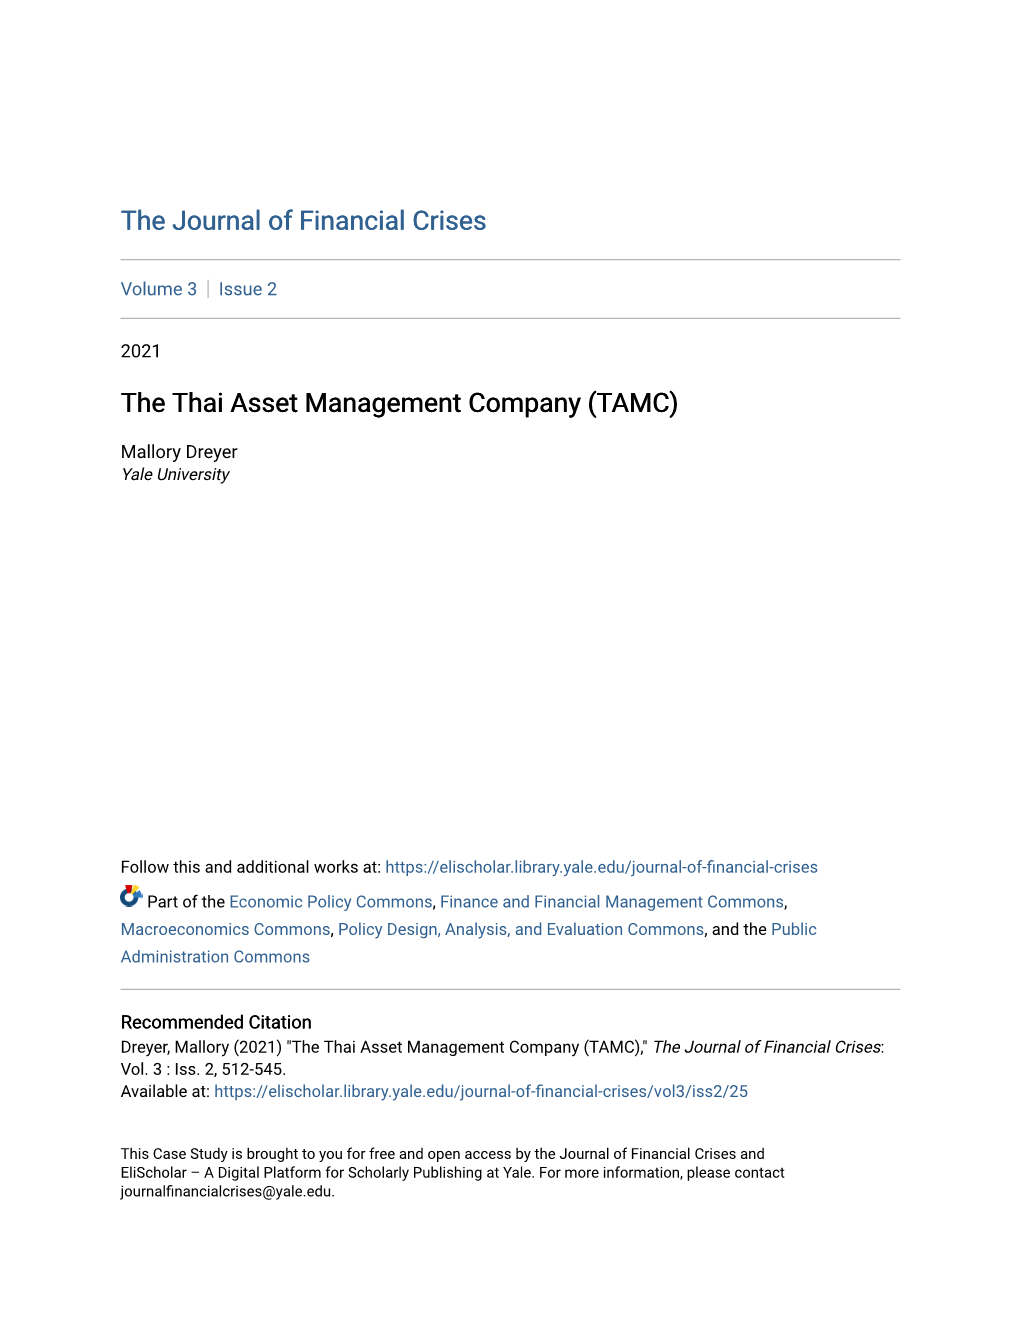 The Thai Asset Management Company (TAMC)